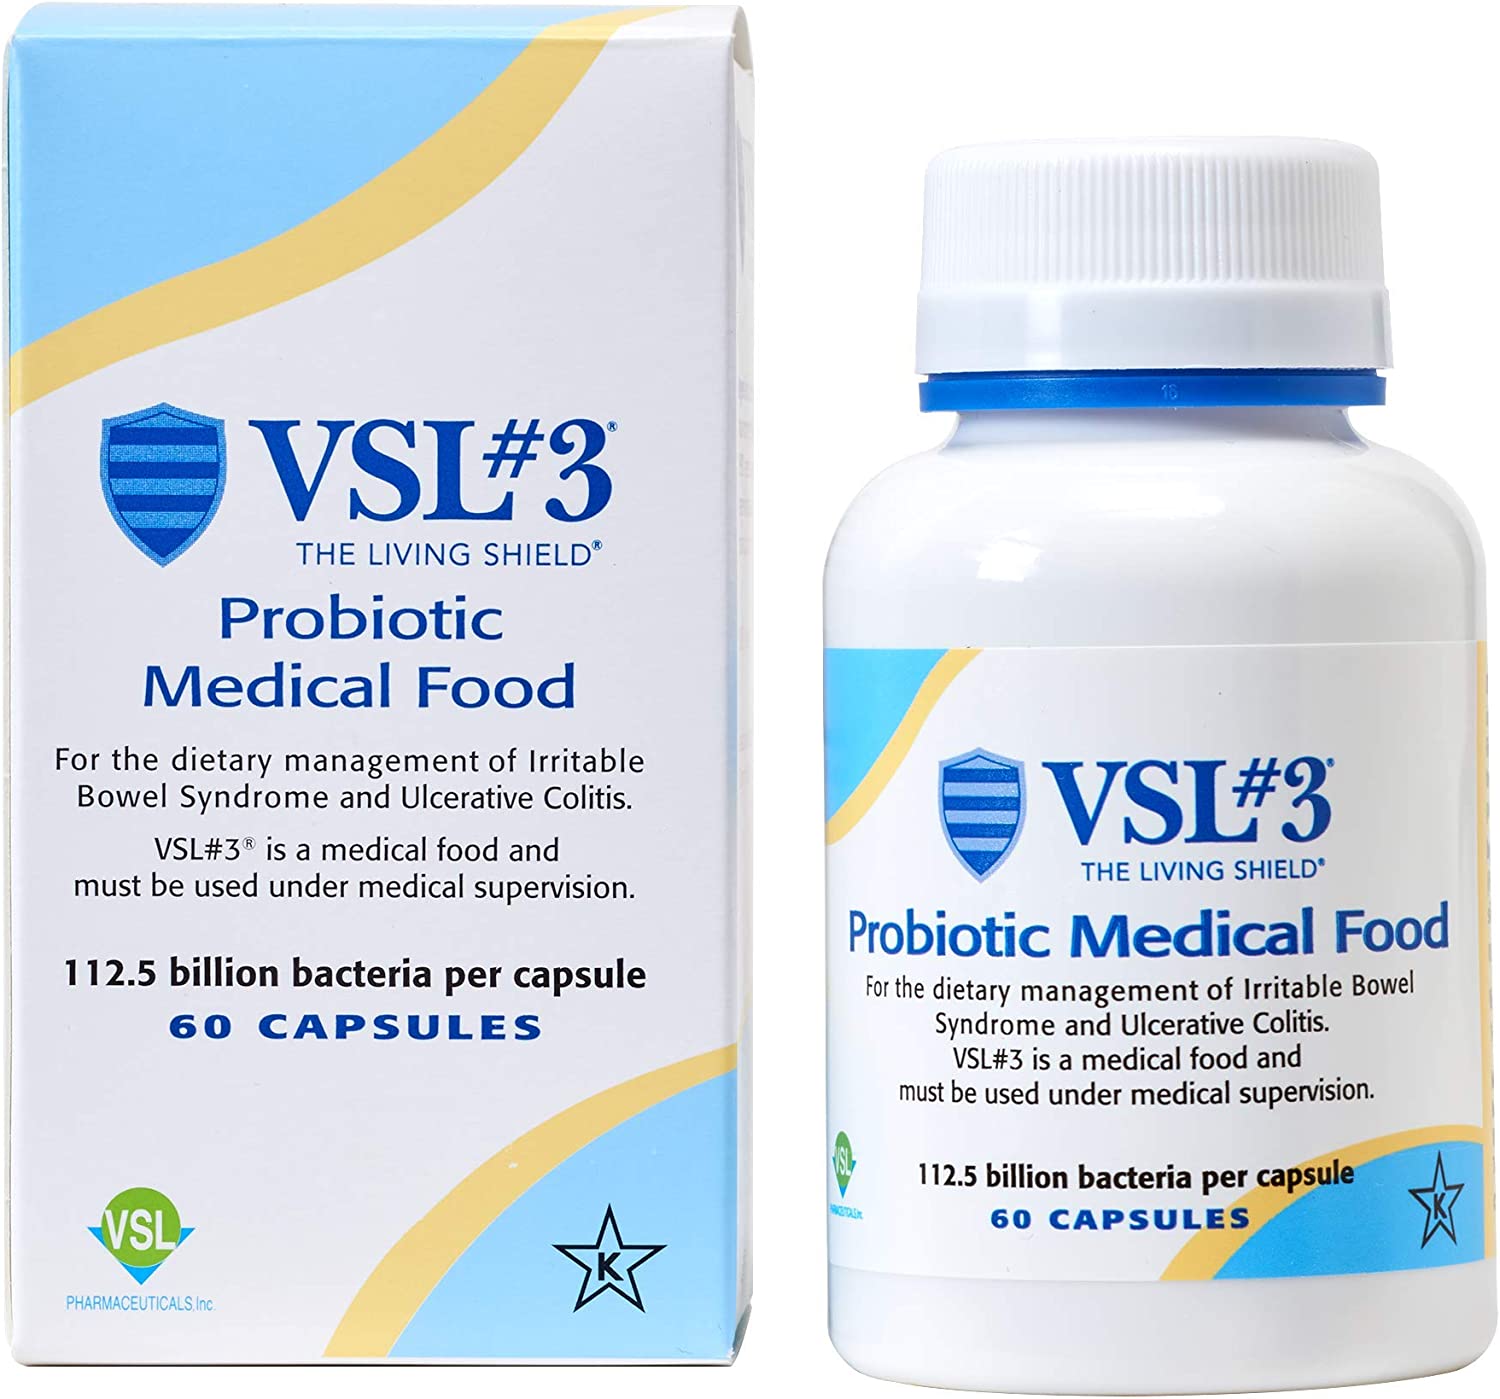 VSL #3 + Probiotic Medical Food for Dietary Management of Irritable Bowel Syndrome